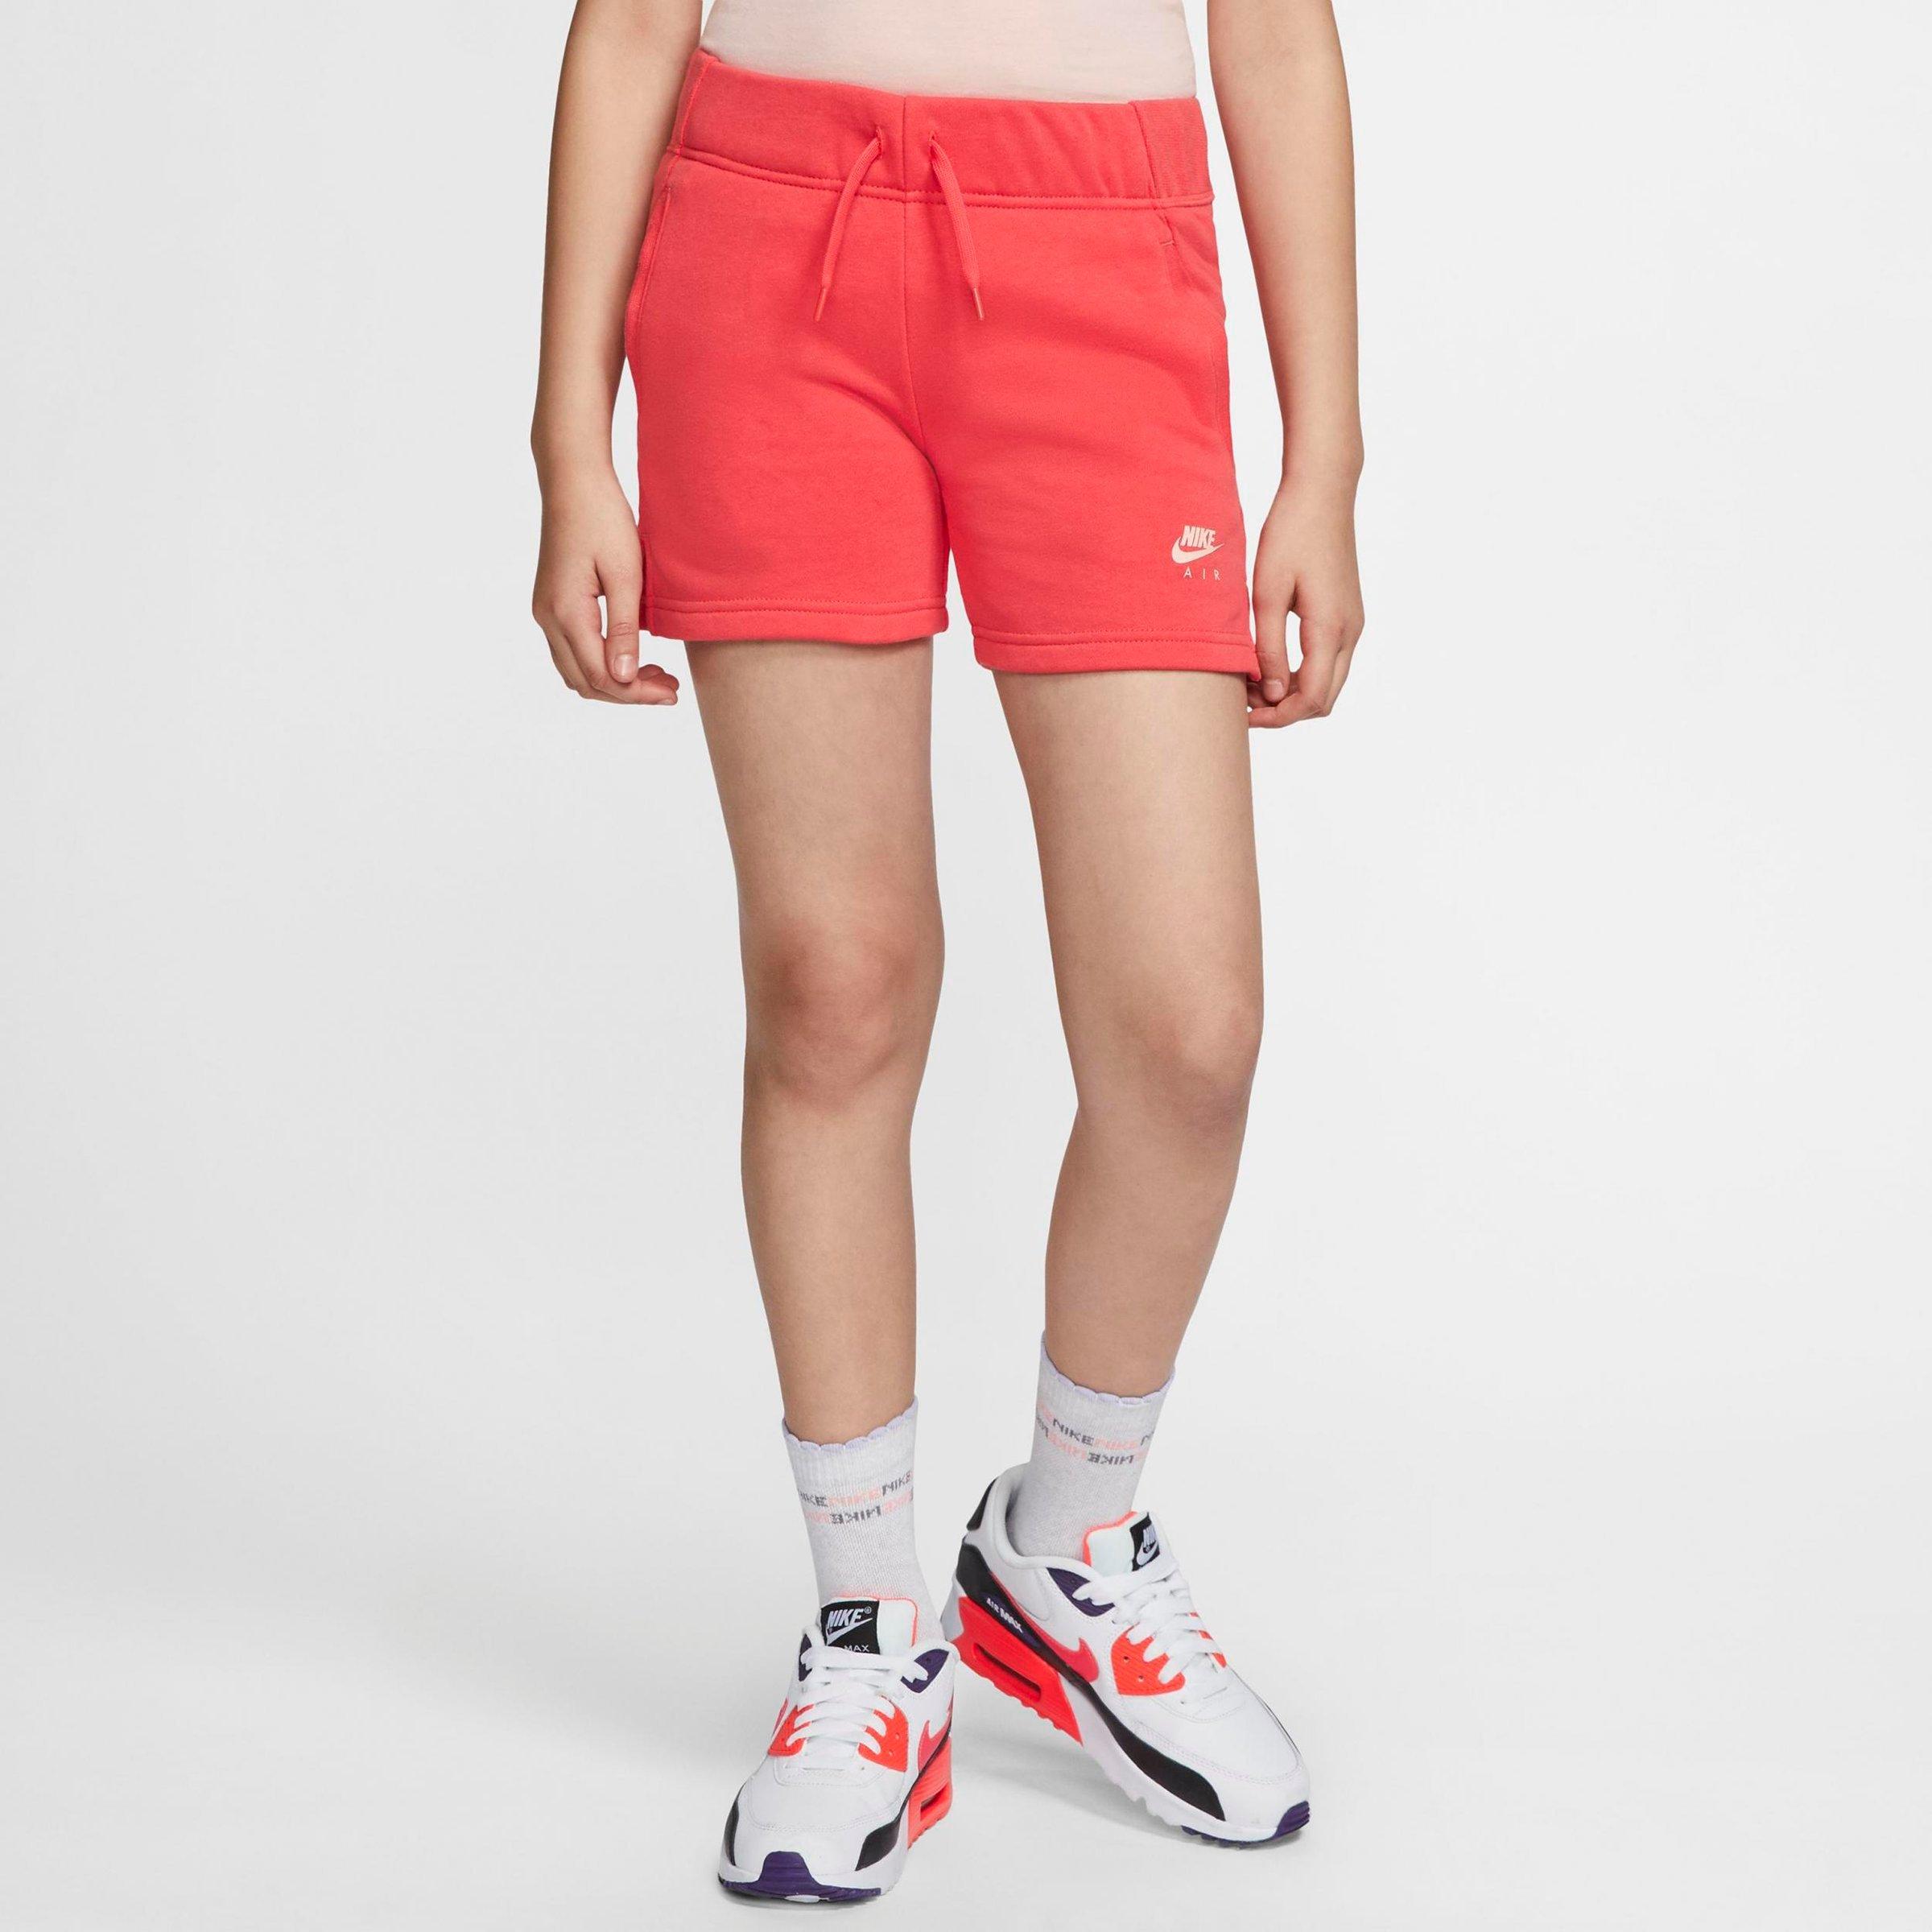 jd sports girls shorts